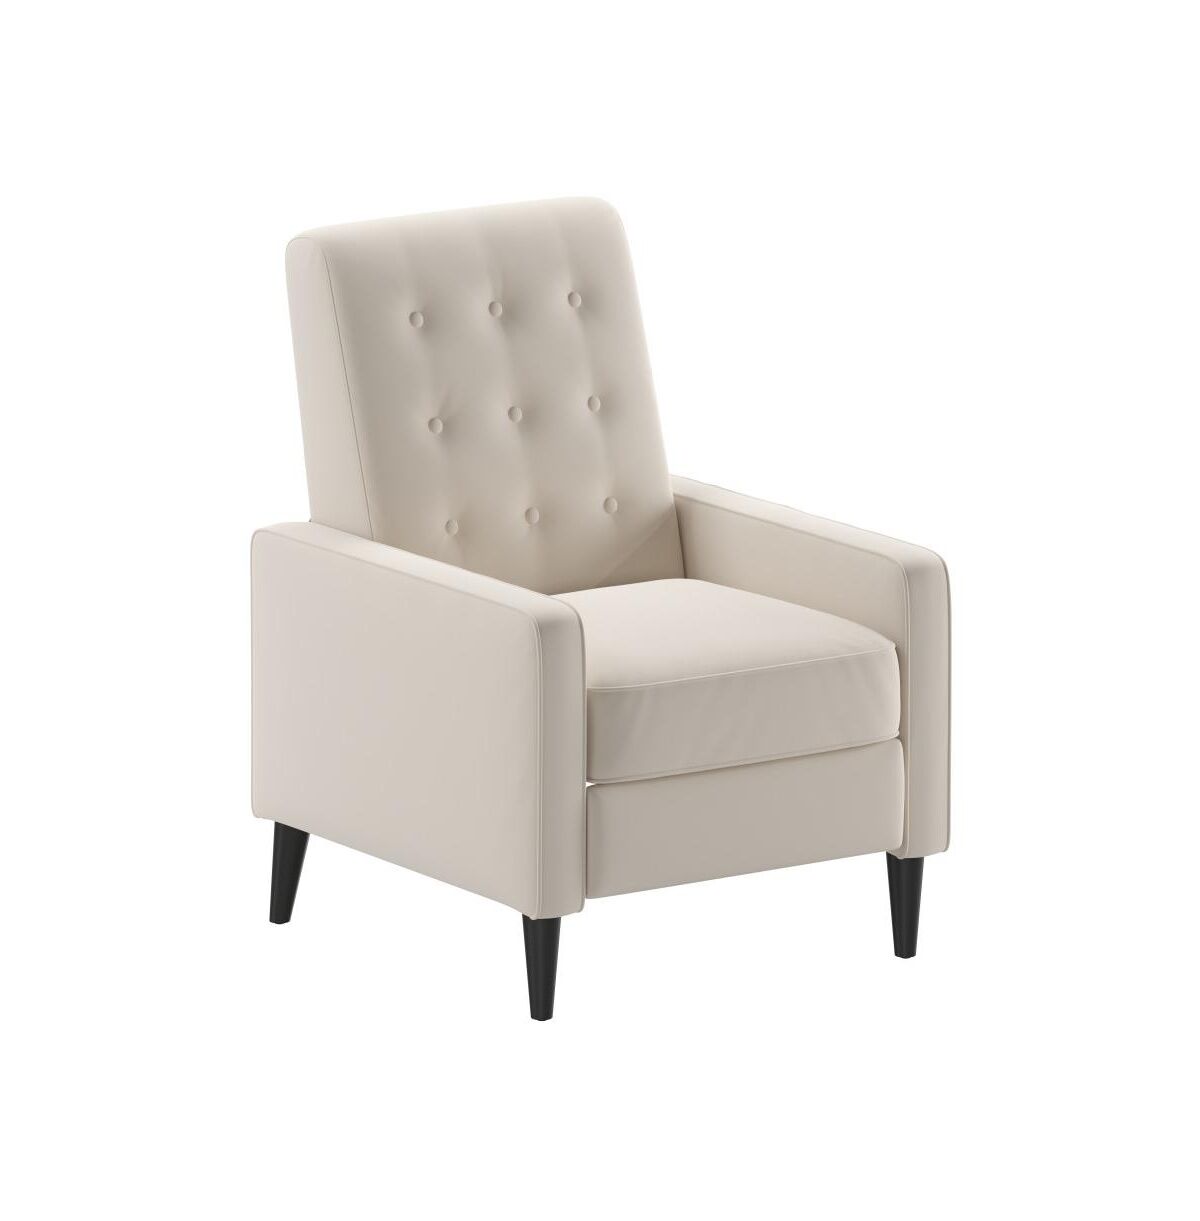 Merrick Lane Darcy Recliner Chair Mid-Century Modern Tufted Upholstery Ergonomic Push Back Living Room Recliner - Cream